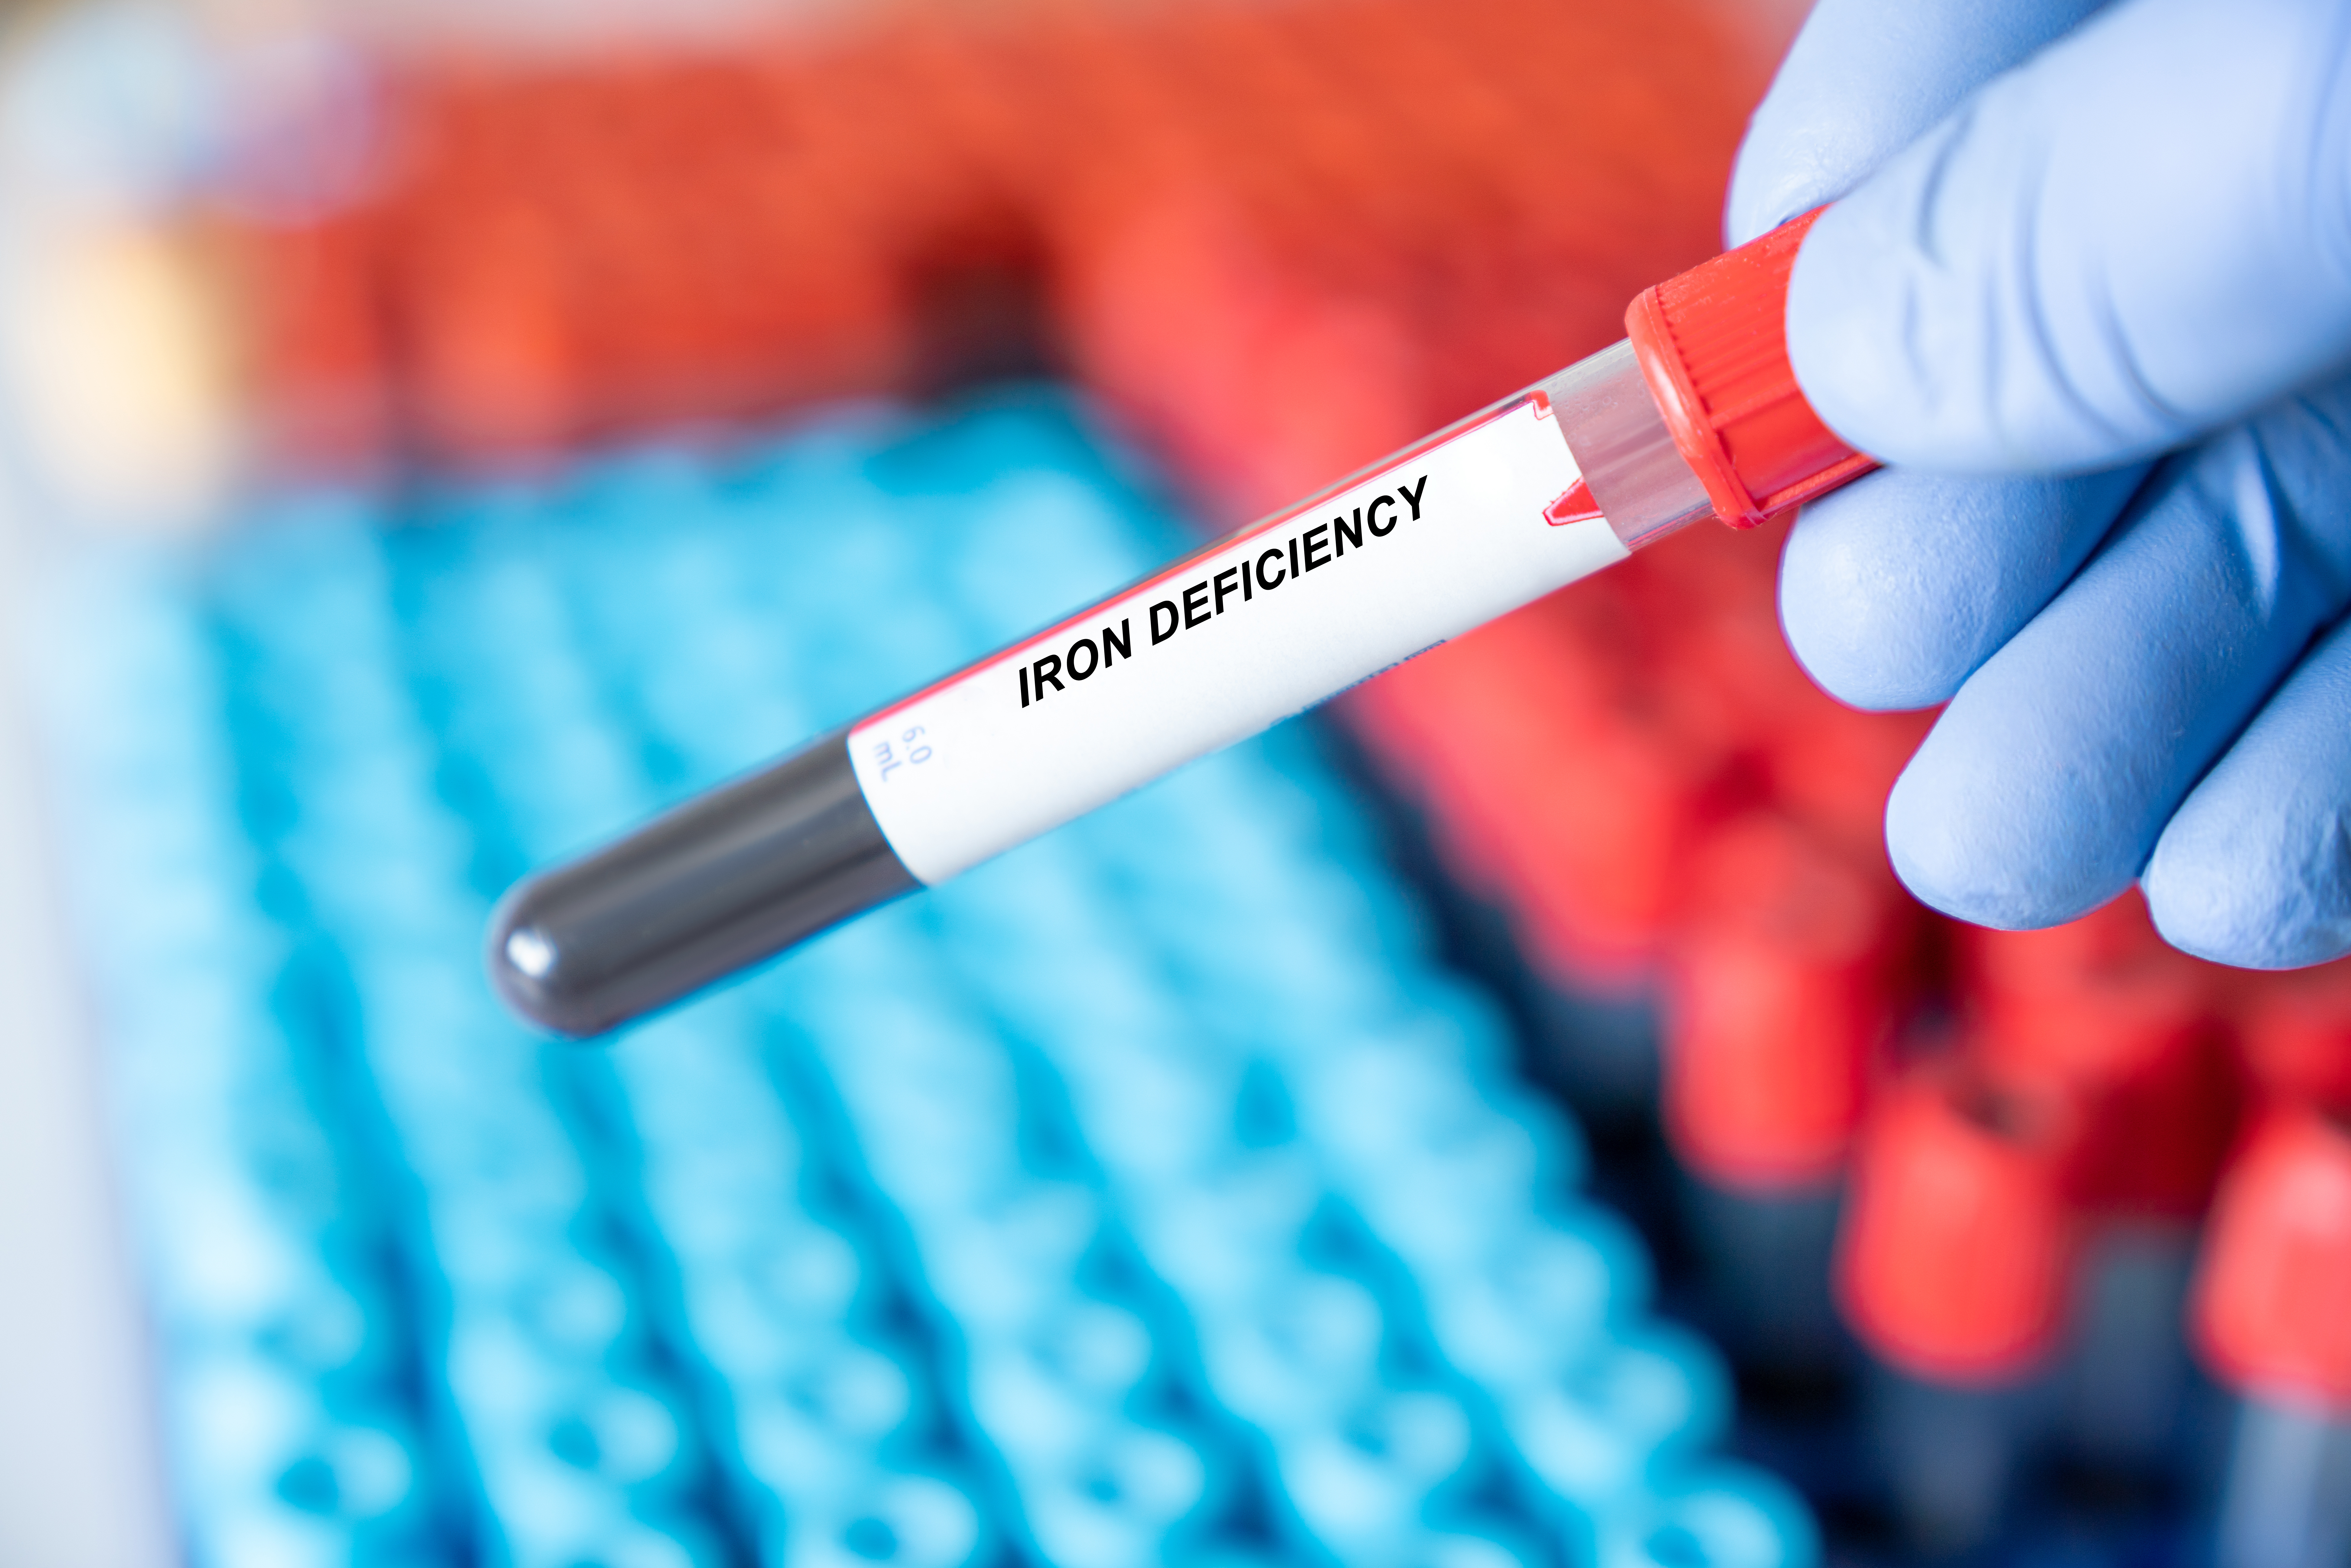 Iron Deficiency. Iron Deficiency disease blood test inmedical laboratory